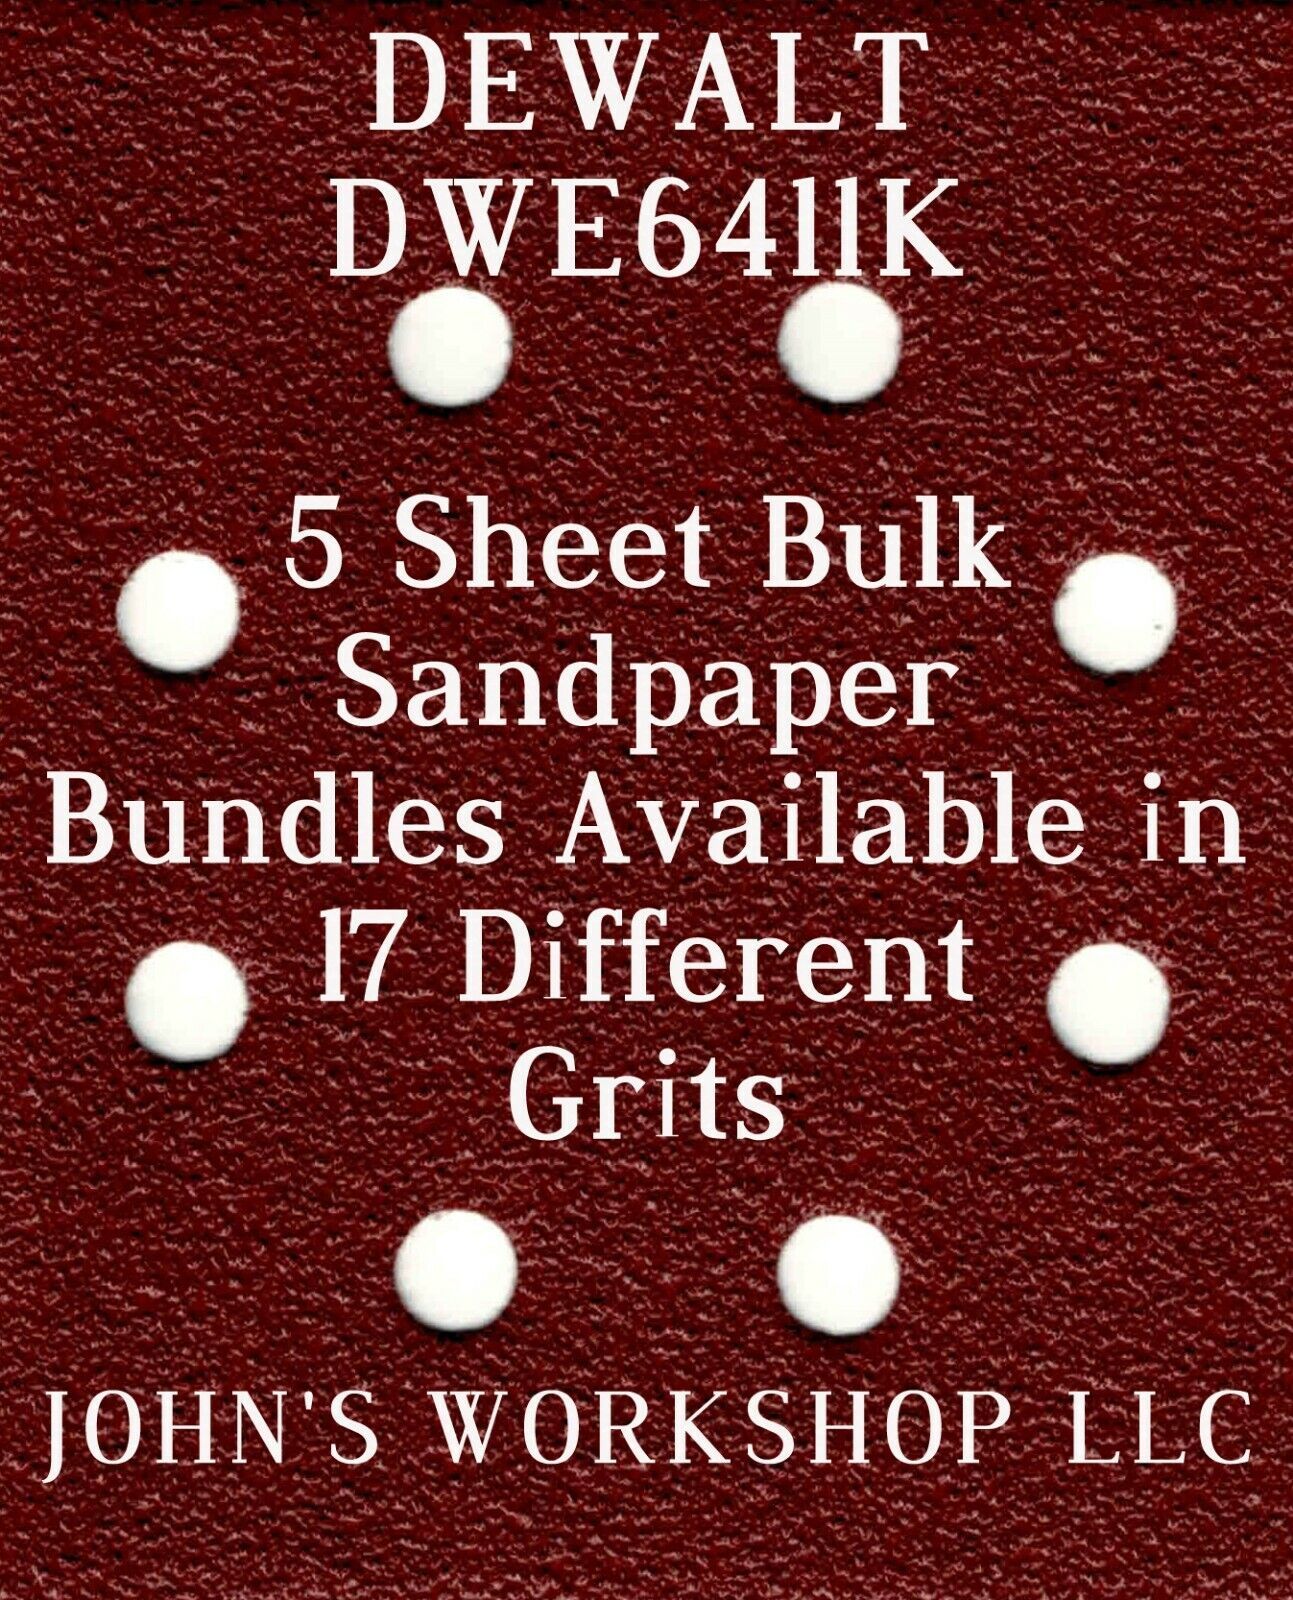 DEWALT DWE6411K - 1/4 Sheet - 17 Grits - No-Slip - 5 Sandpaper Bulk Bundles - $4.99